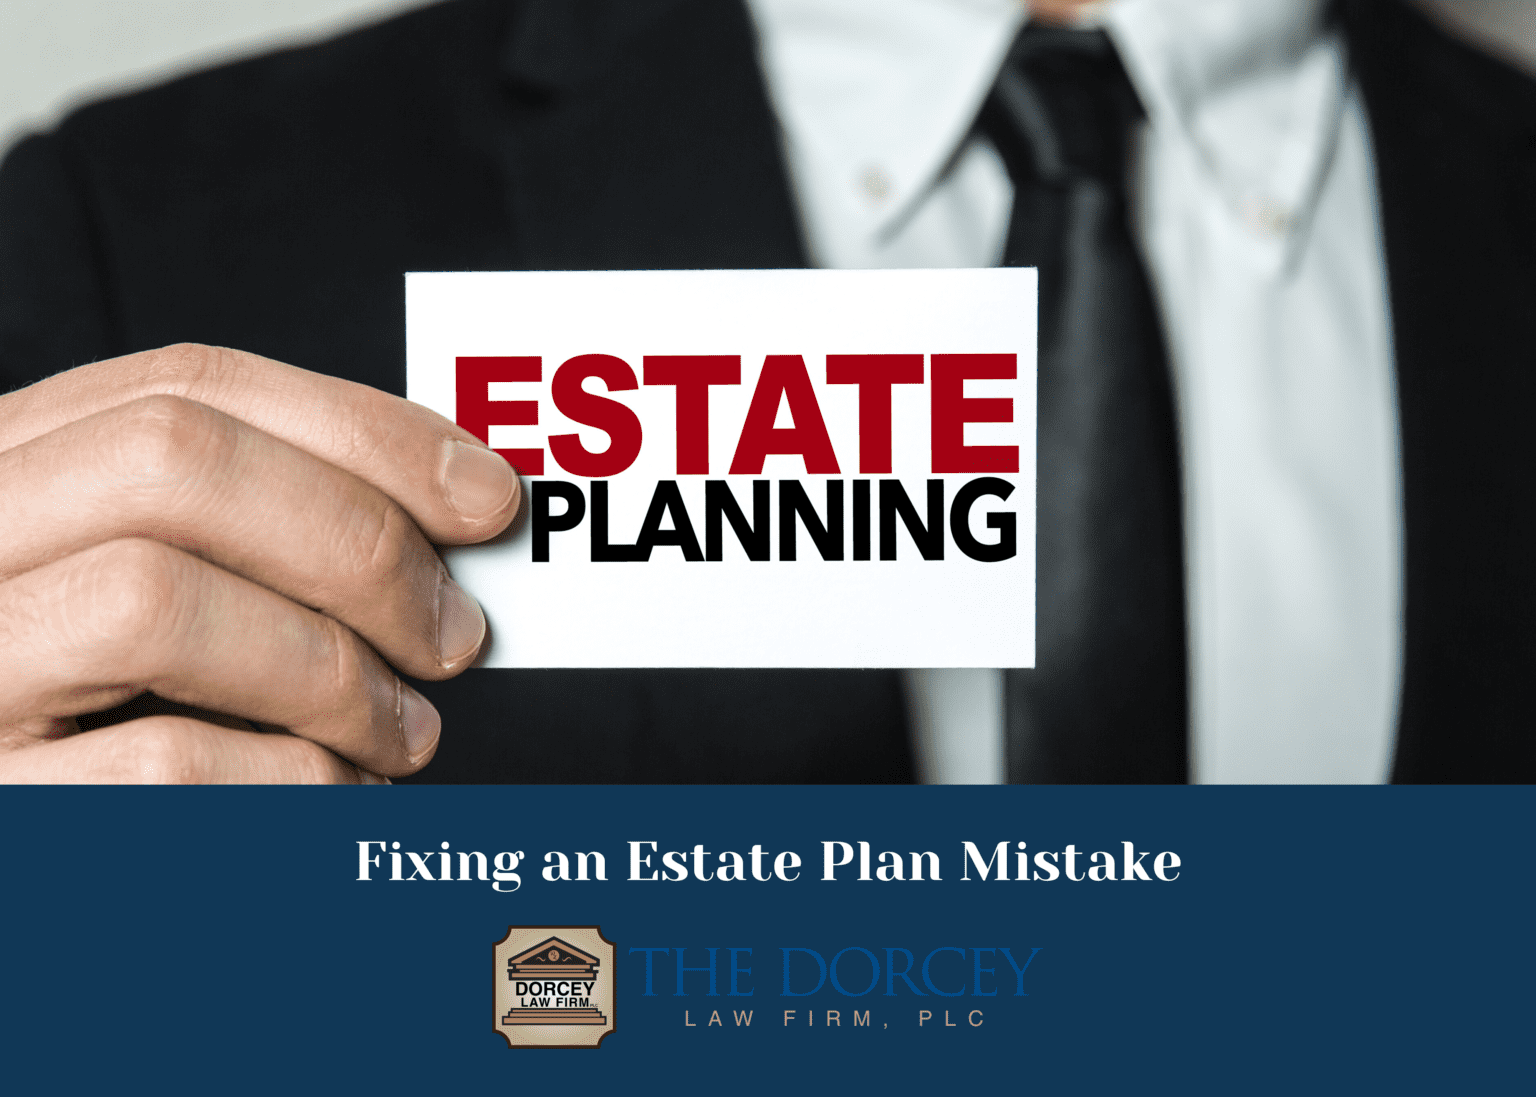 Fixing an Estate Plan Mistake text